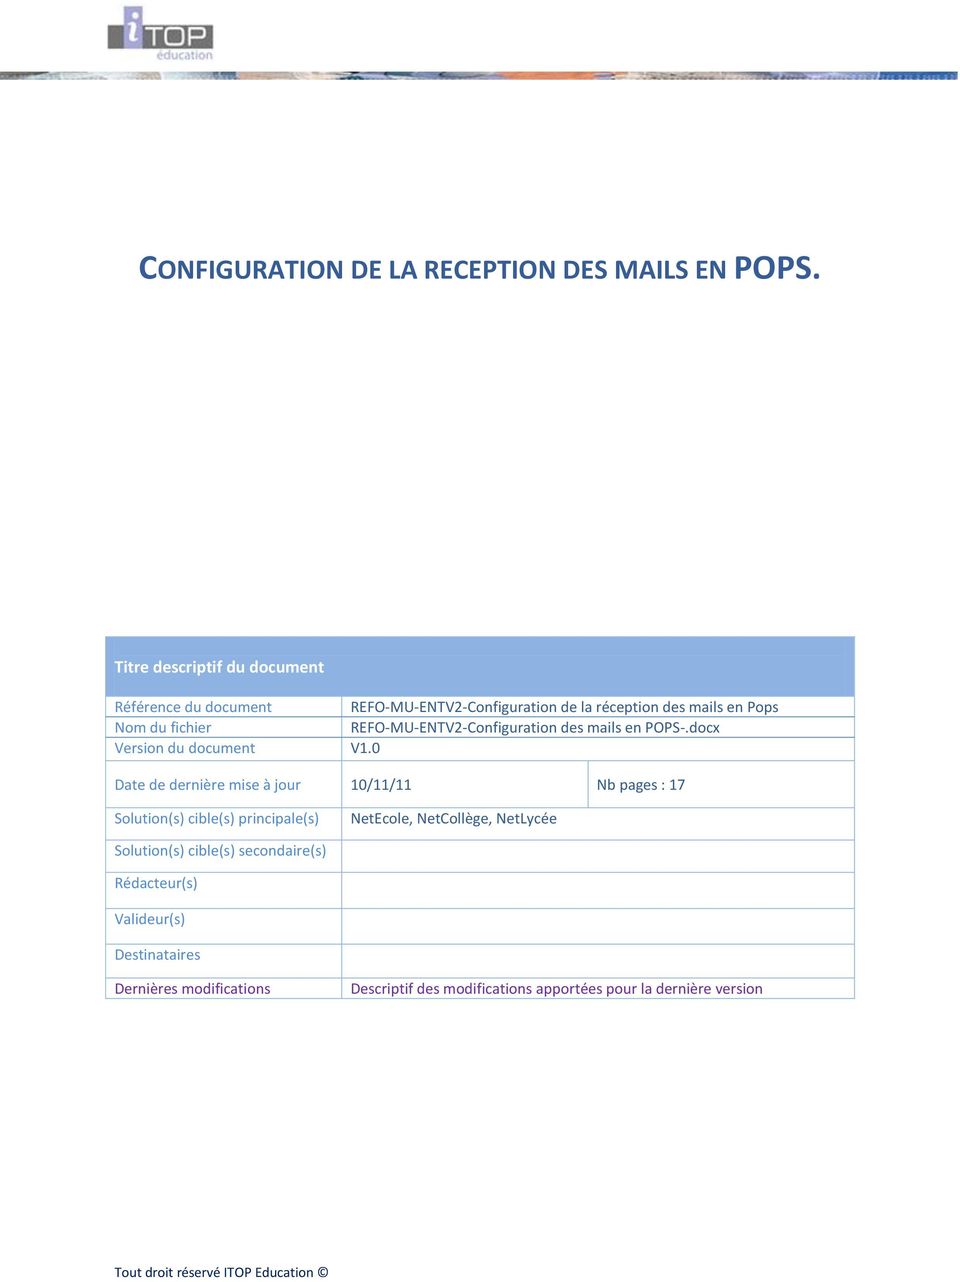 REFO-MU-ENTV2-Configuration des mails en POPS-.docx Version du document V1.